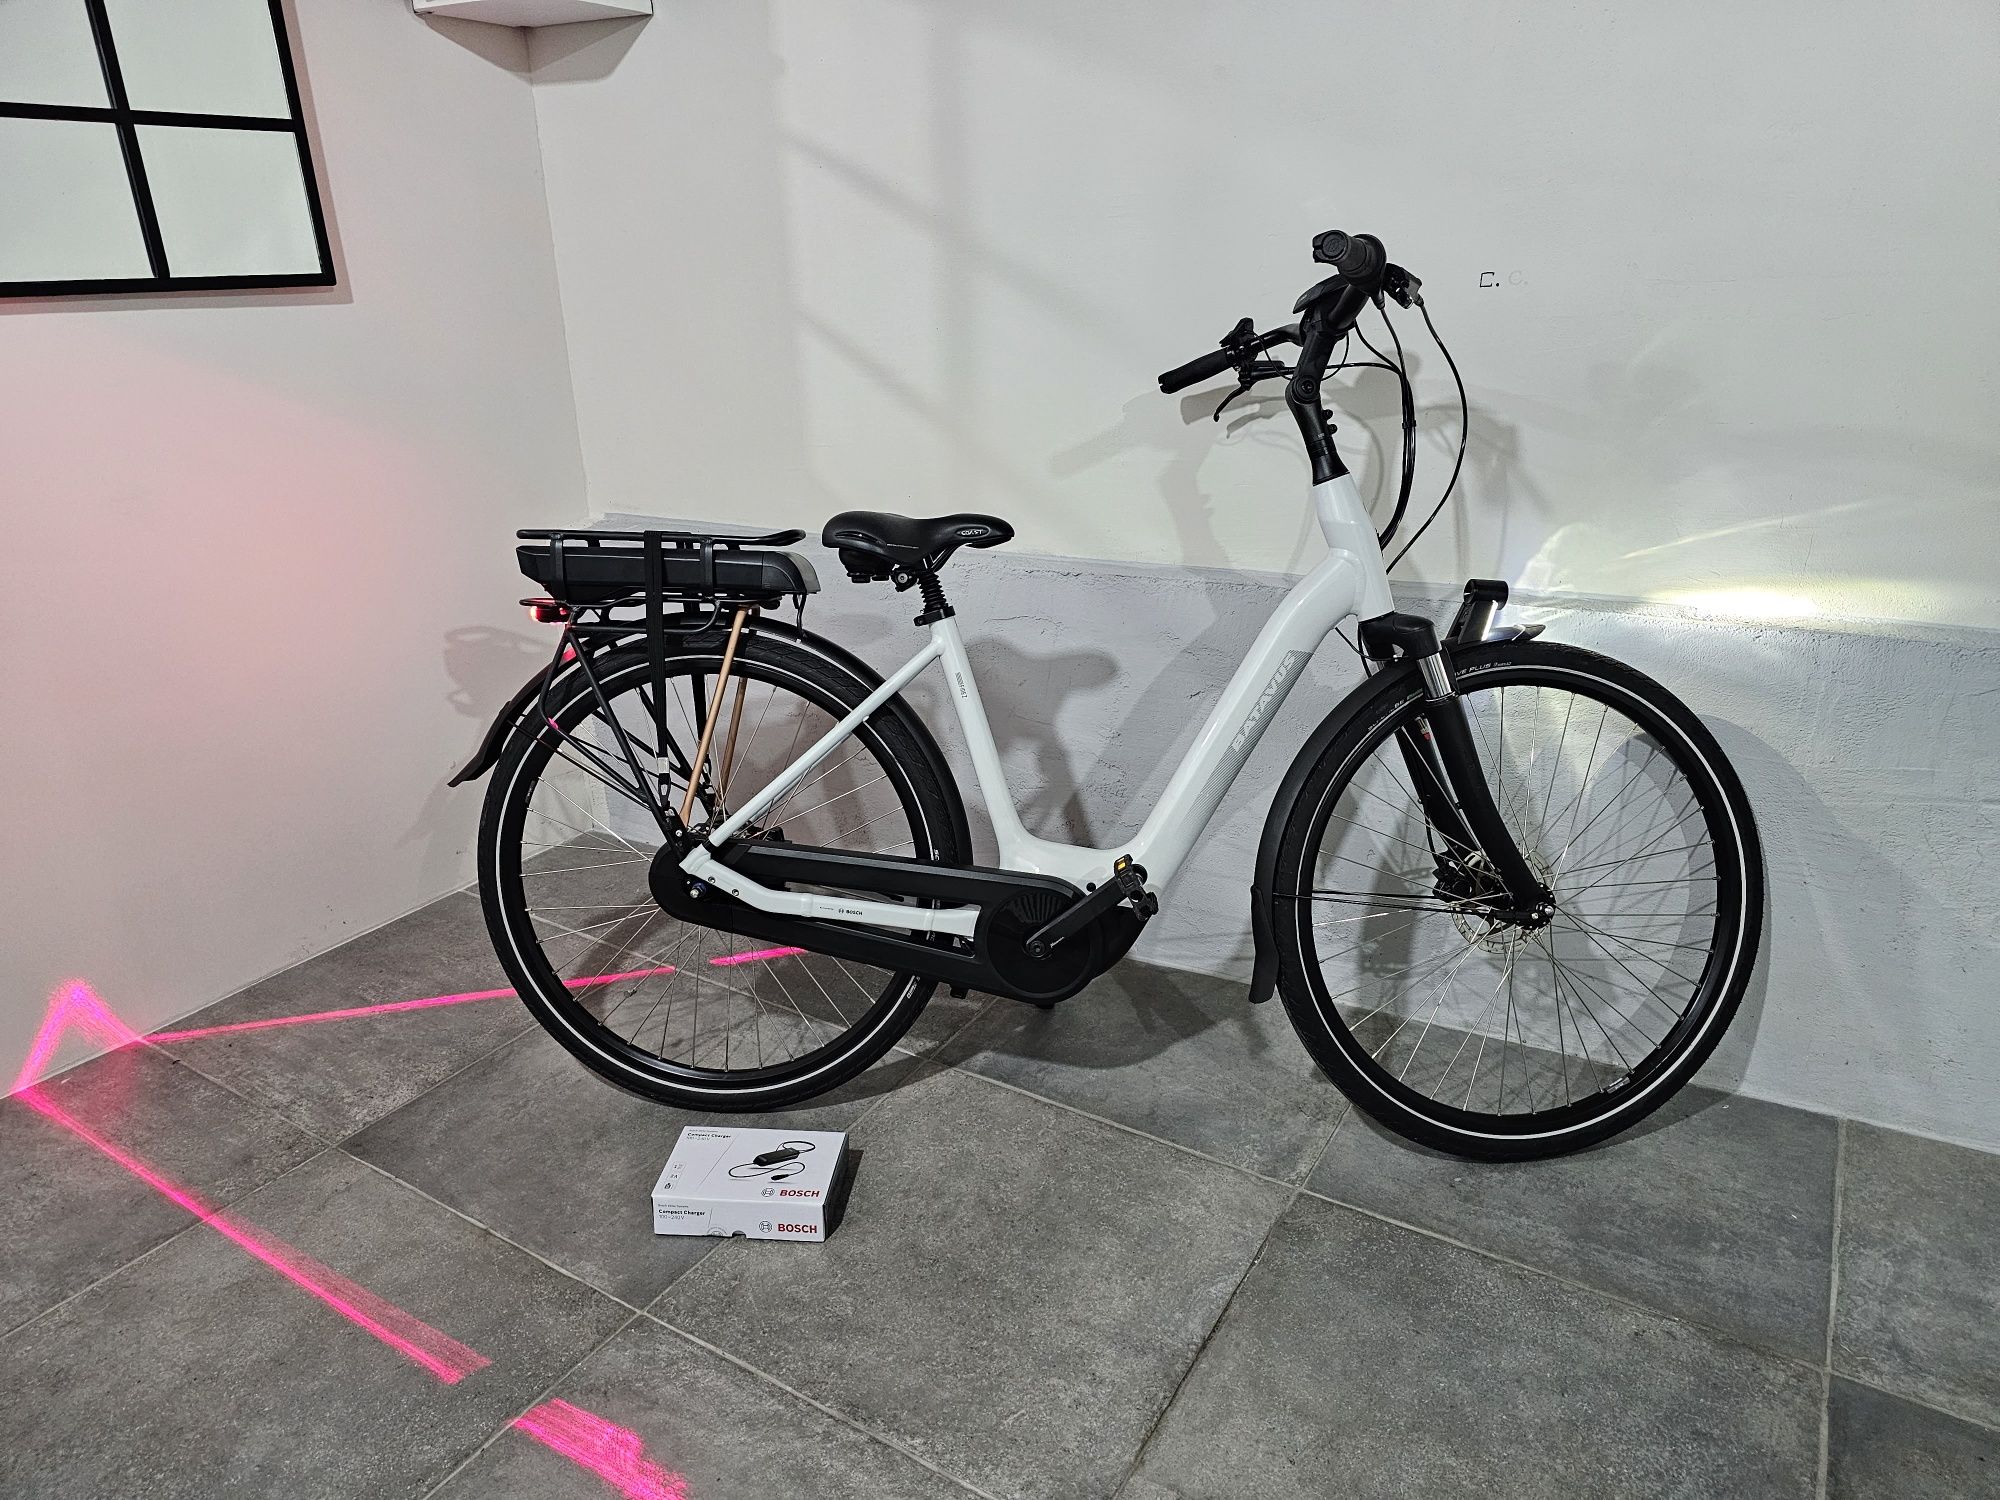 bicicleta electrica BATAVUS finez-e go 2020, 197km, oraș treking